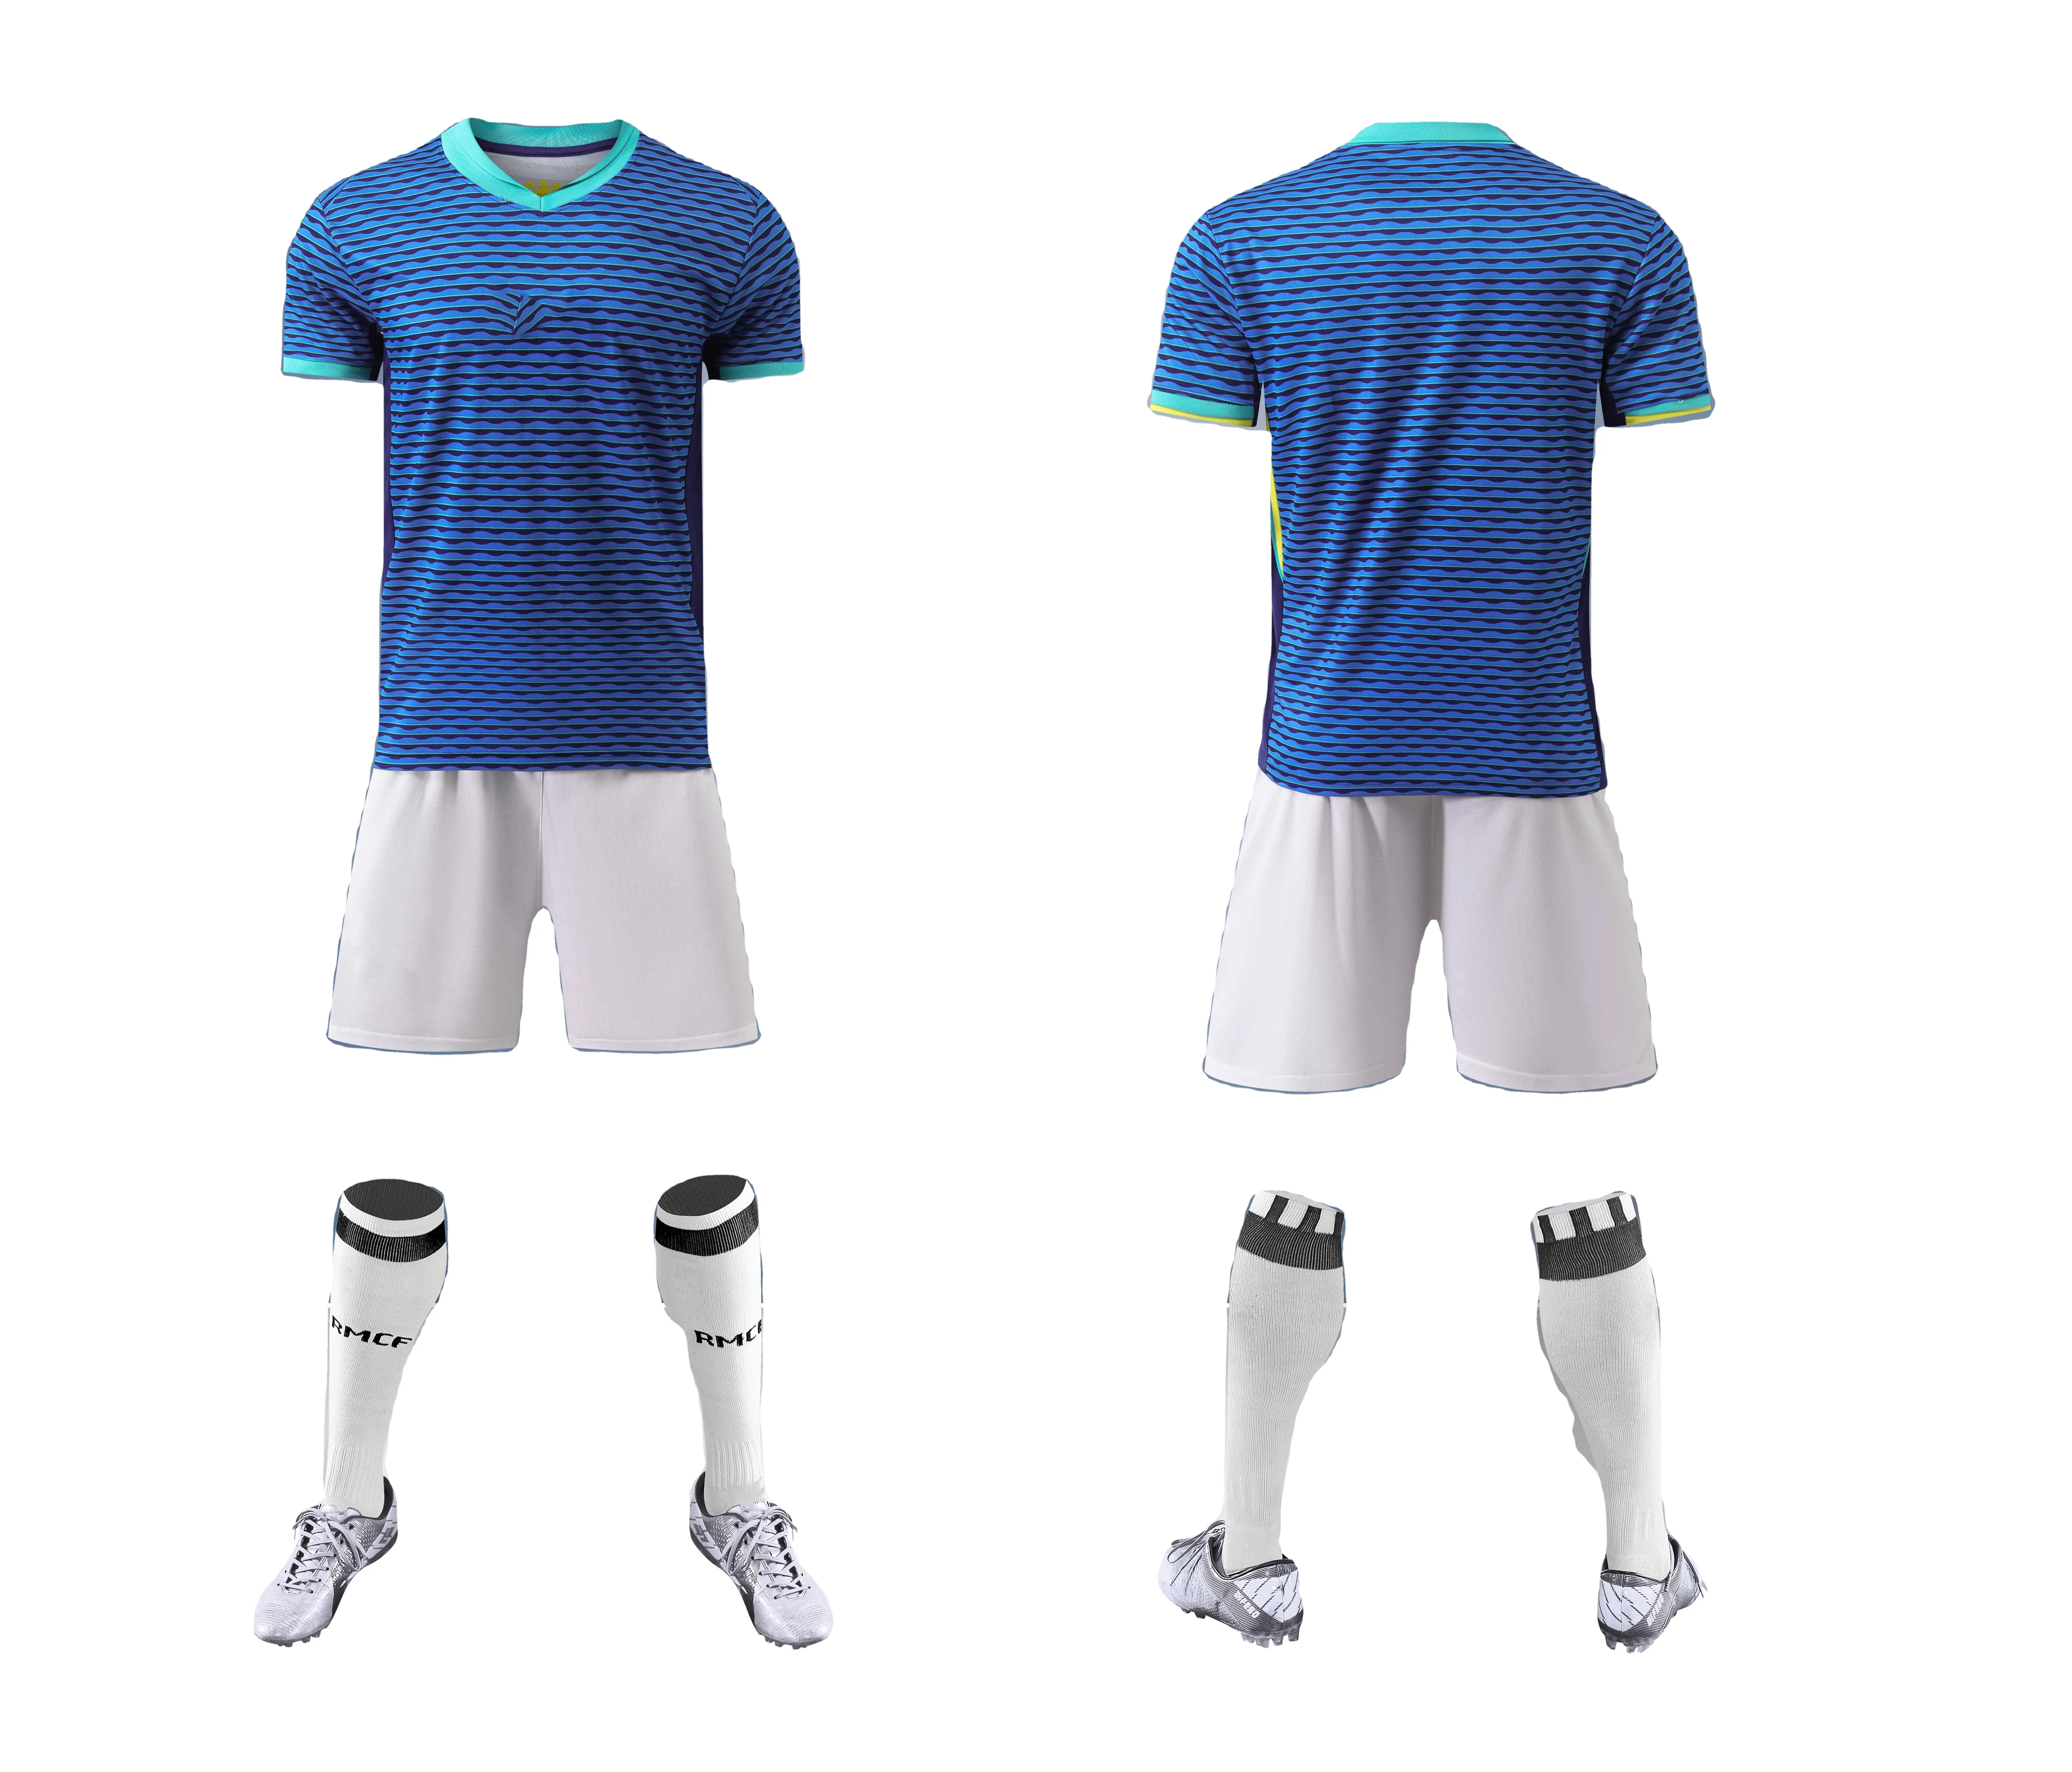 Camisa de futebol masculina, feminina e infantil de qualidade real, camisa de futebol com 20 e 21 camisas, atacado barato